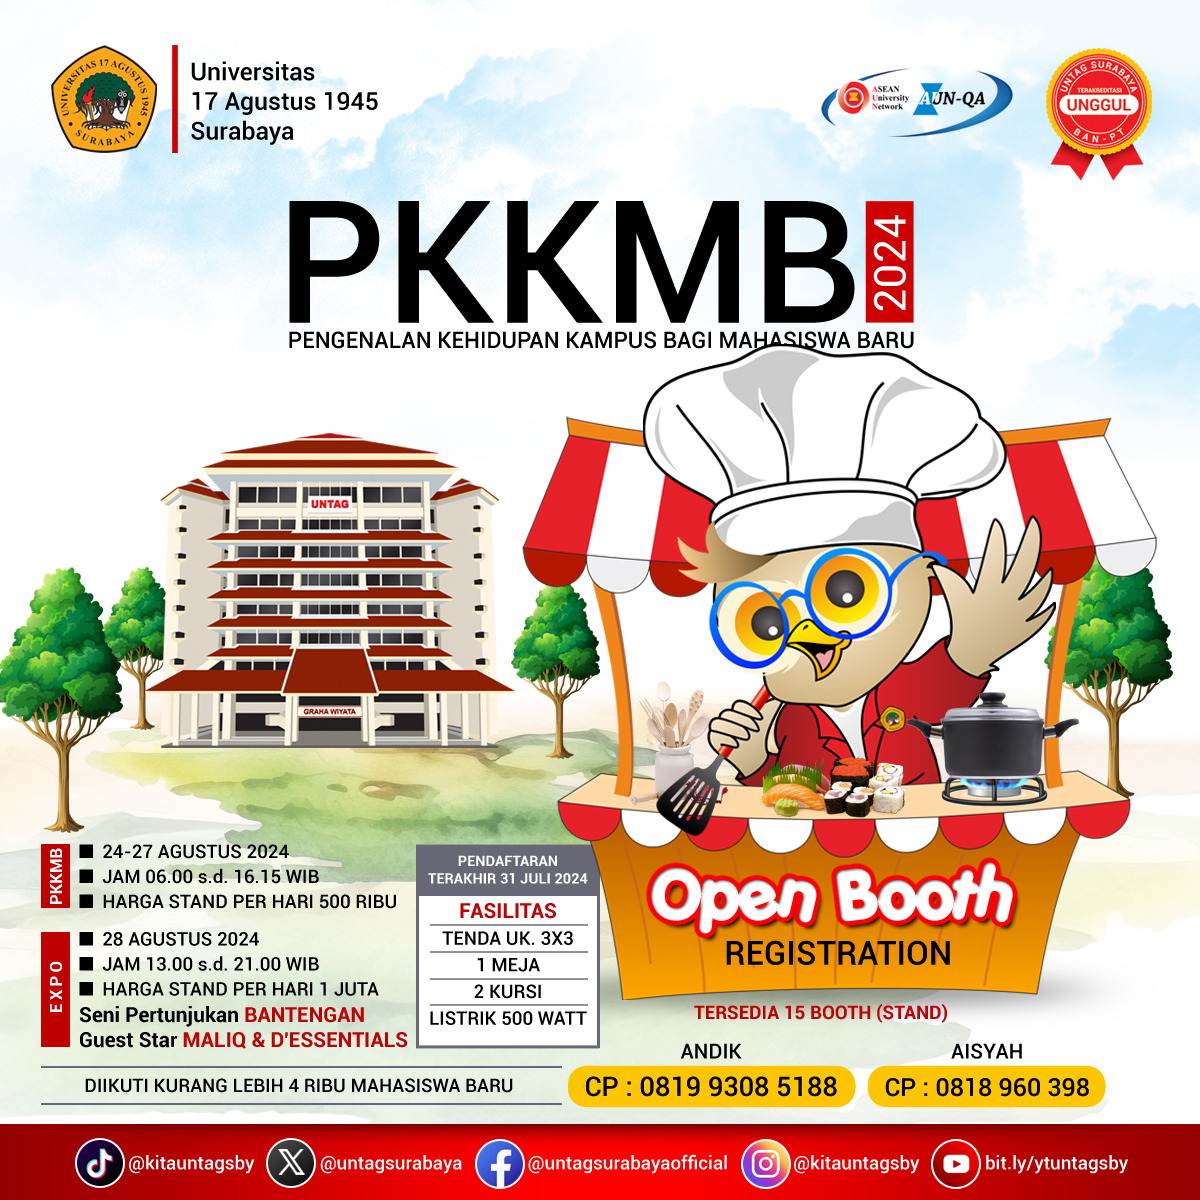 Open Booth PKKMB Untag Surabaya 2024